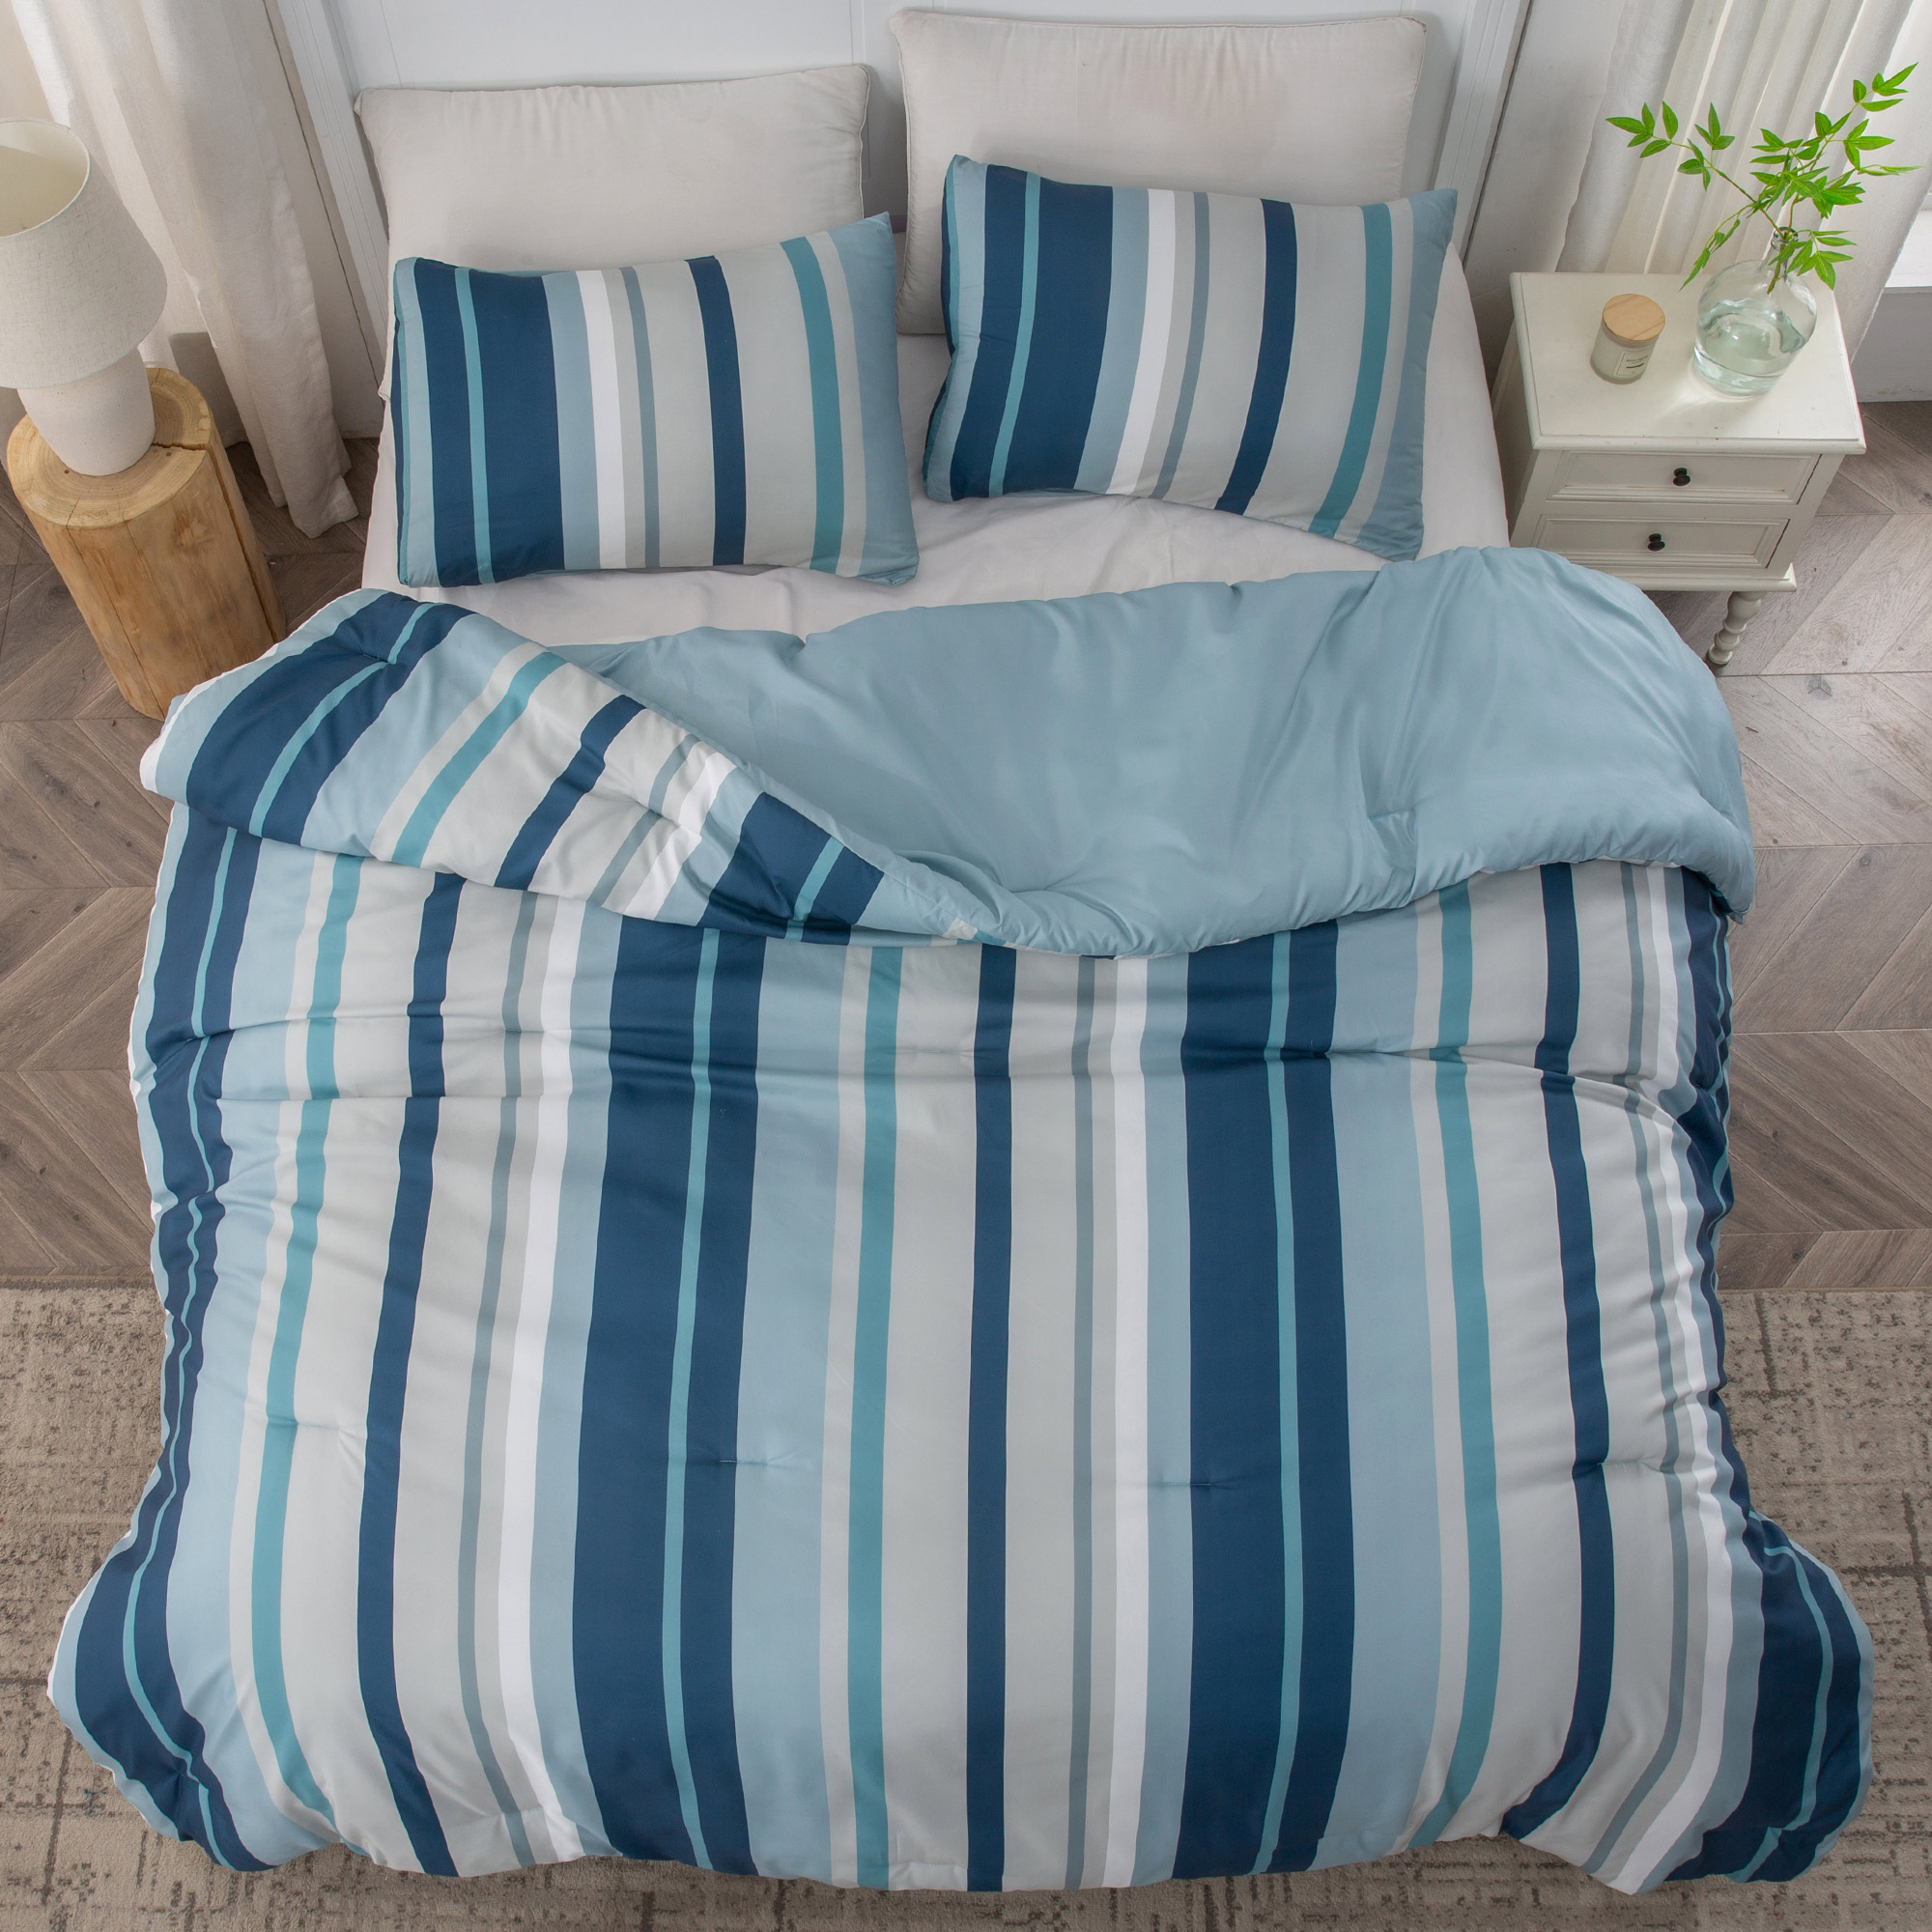 Printed Stripe Microfiber Comforter Set - All-Season Warmth, Blue - King